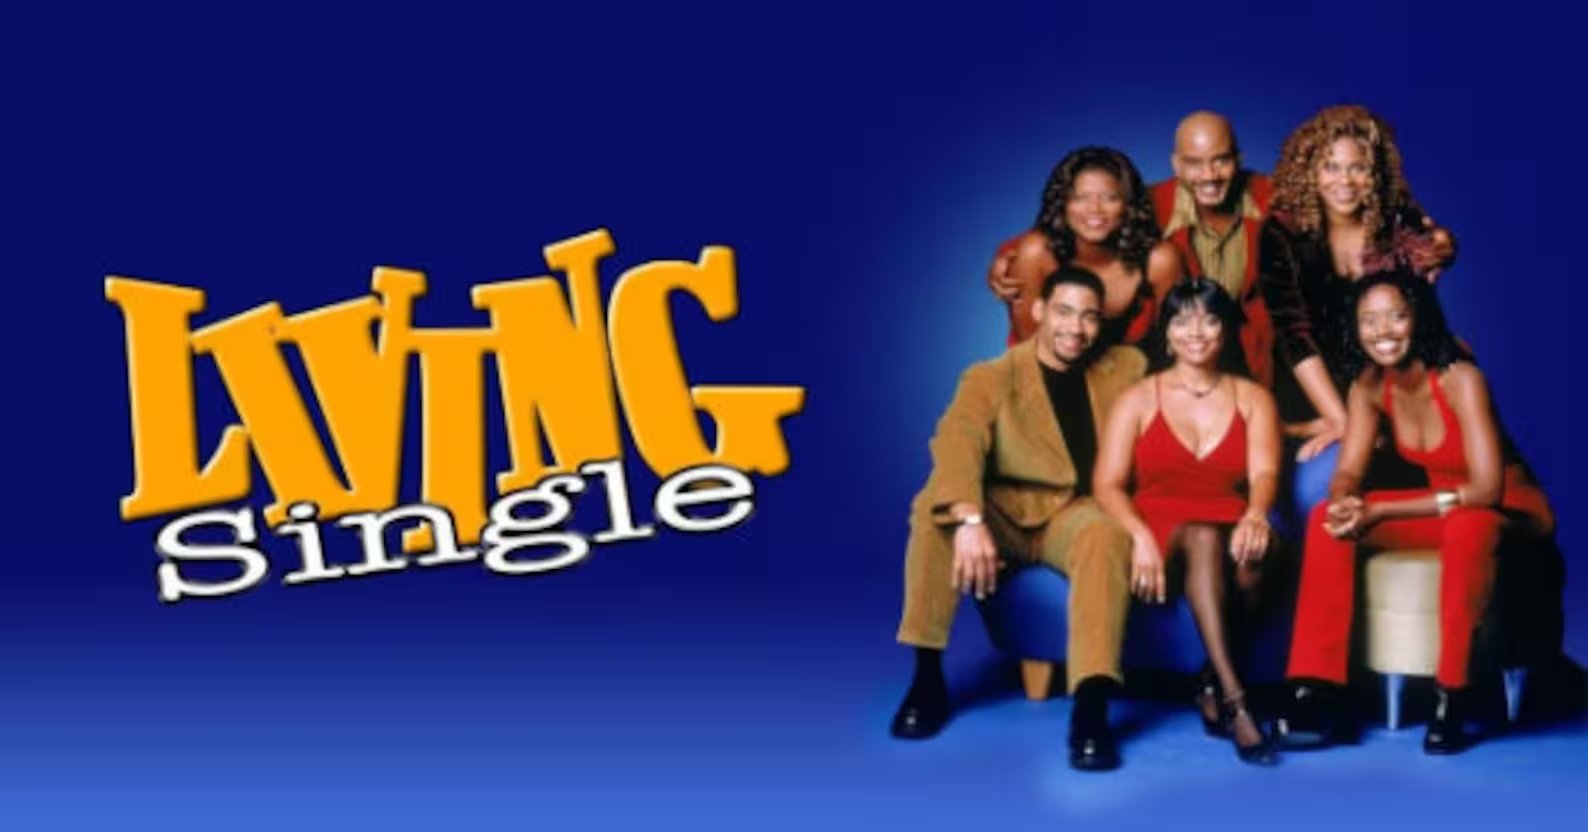 Living Single Complete Series - 5 Season - 1993 - 1998 - USB Flash Drive All 5 Seasons All Episodes - Turkish TV Series